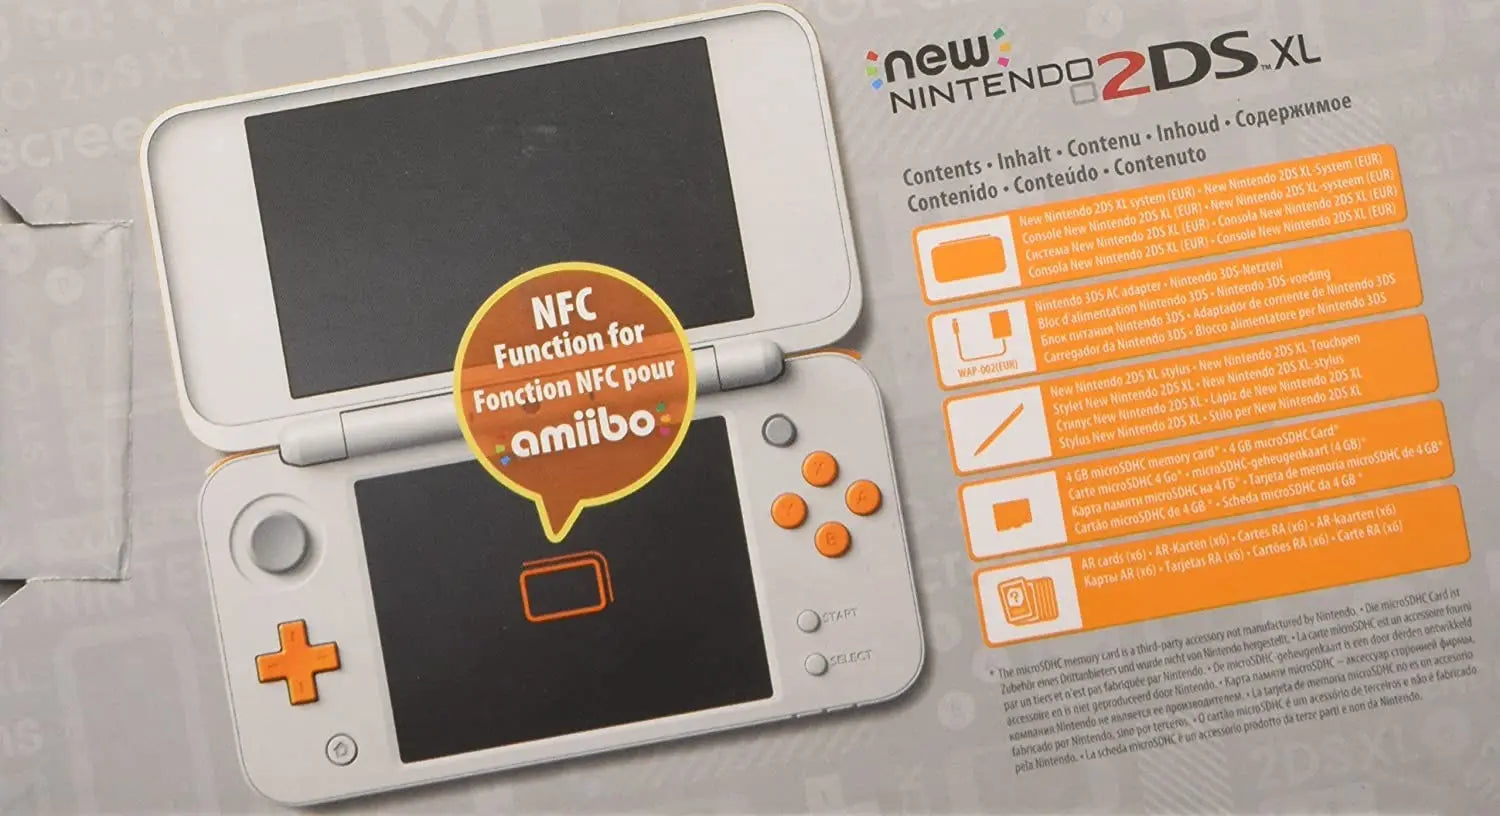 Nintendo New 2DS XL  0045496504533 nintendo